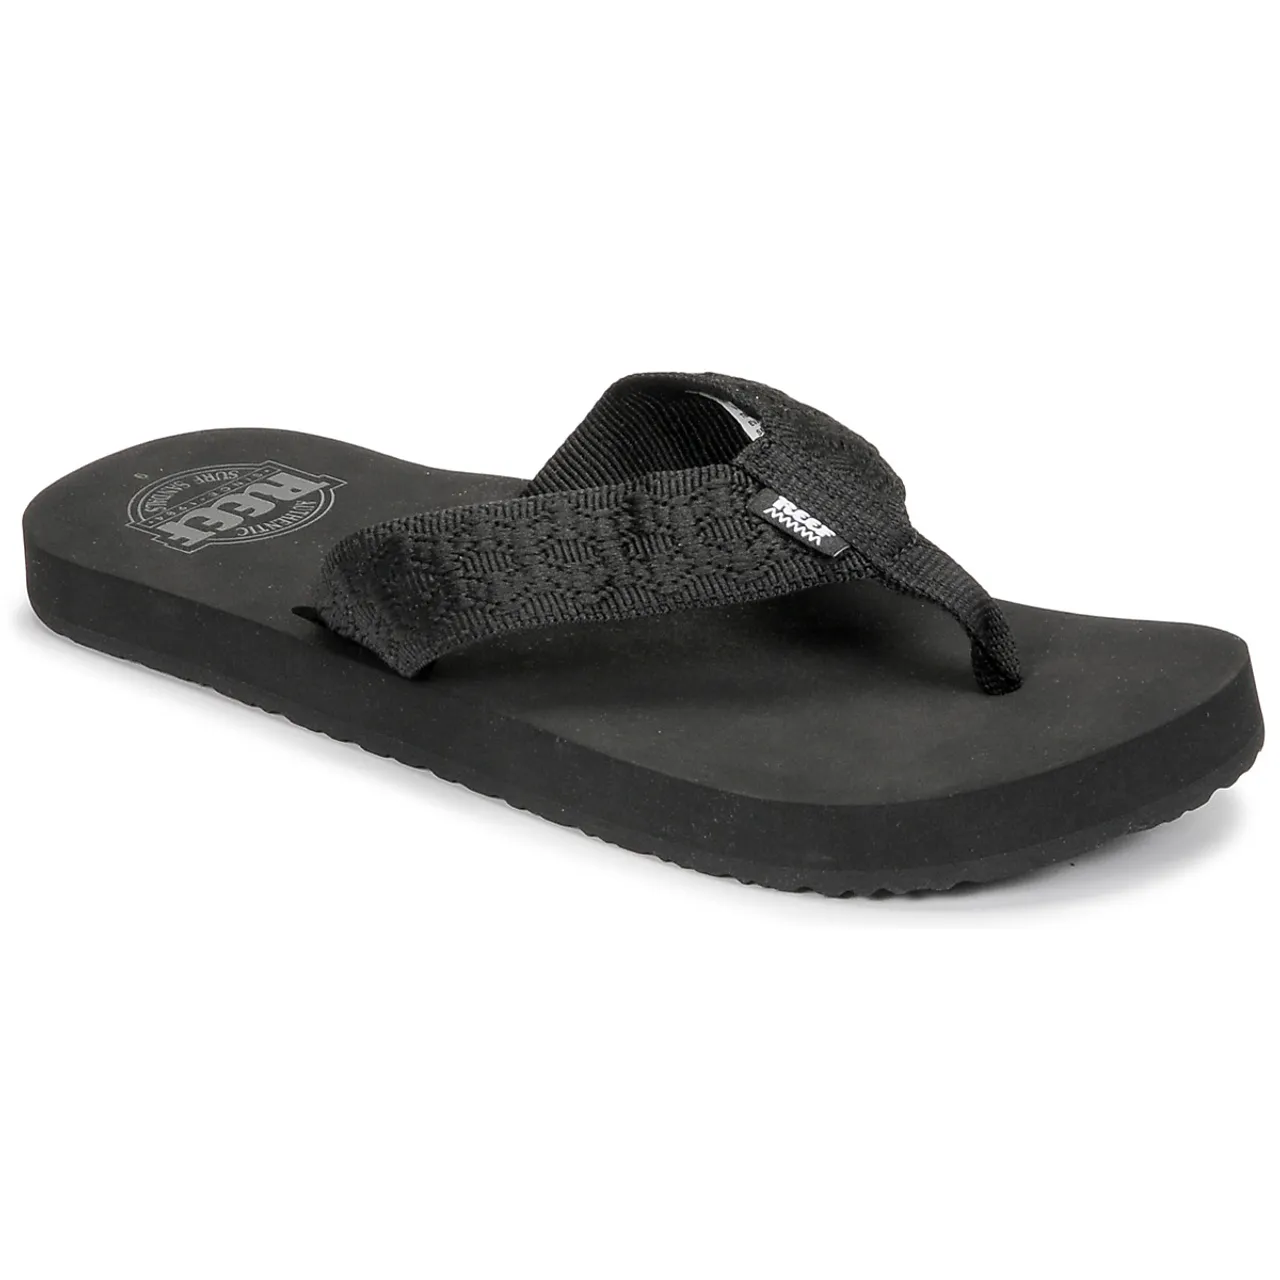 Reef  SMOOTHY  men's Flip flops / Sandals (Shoes) in Black